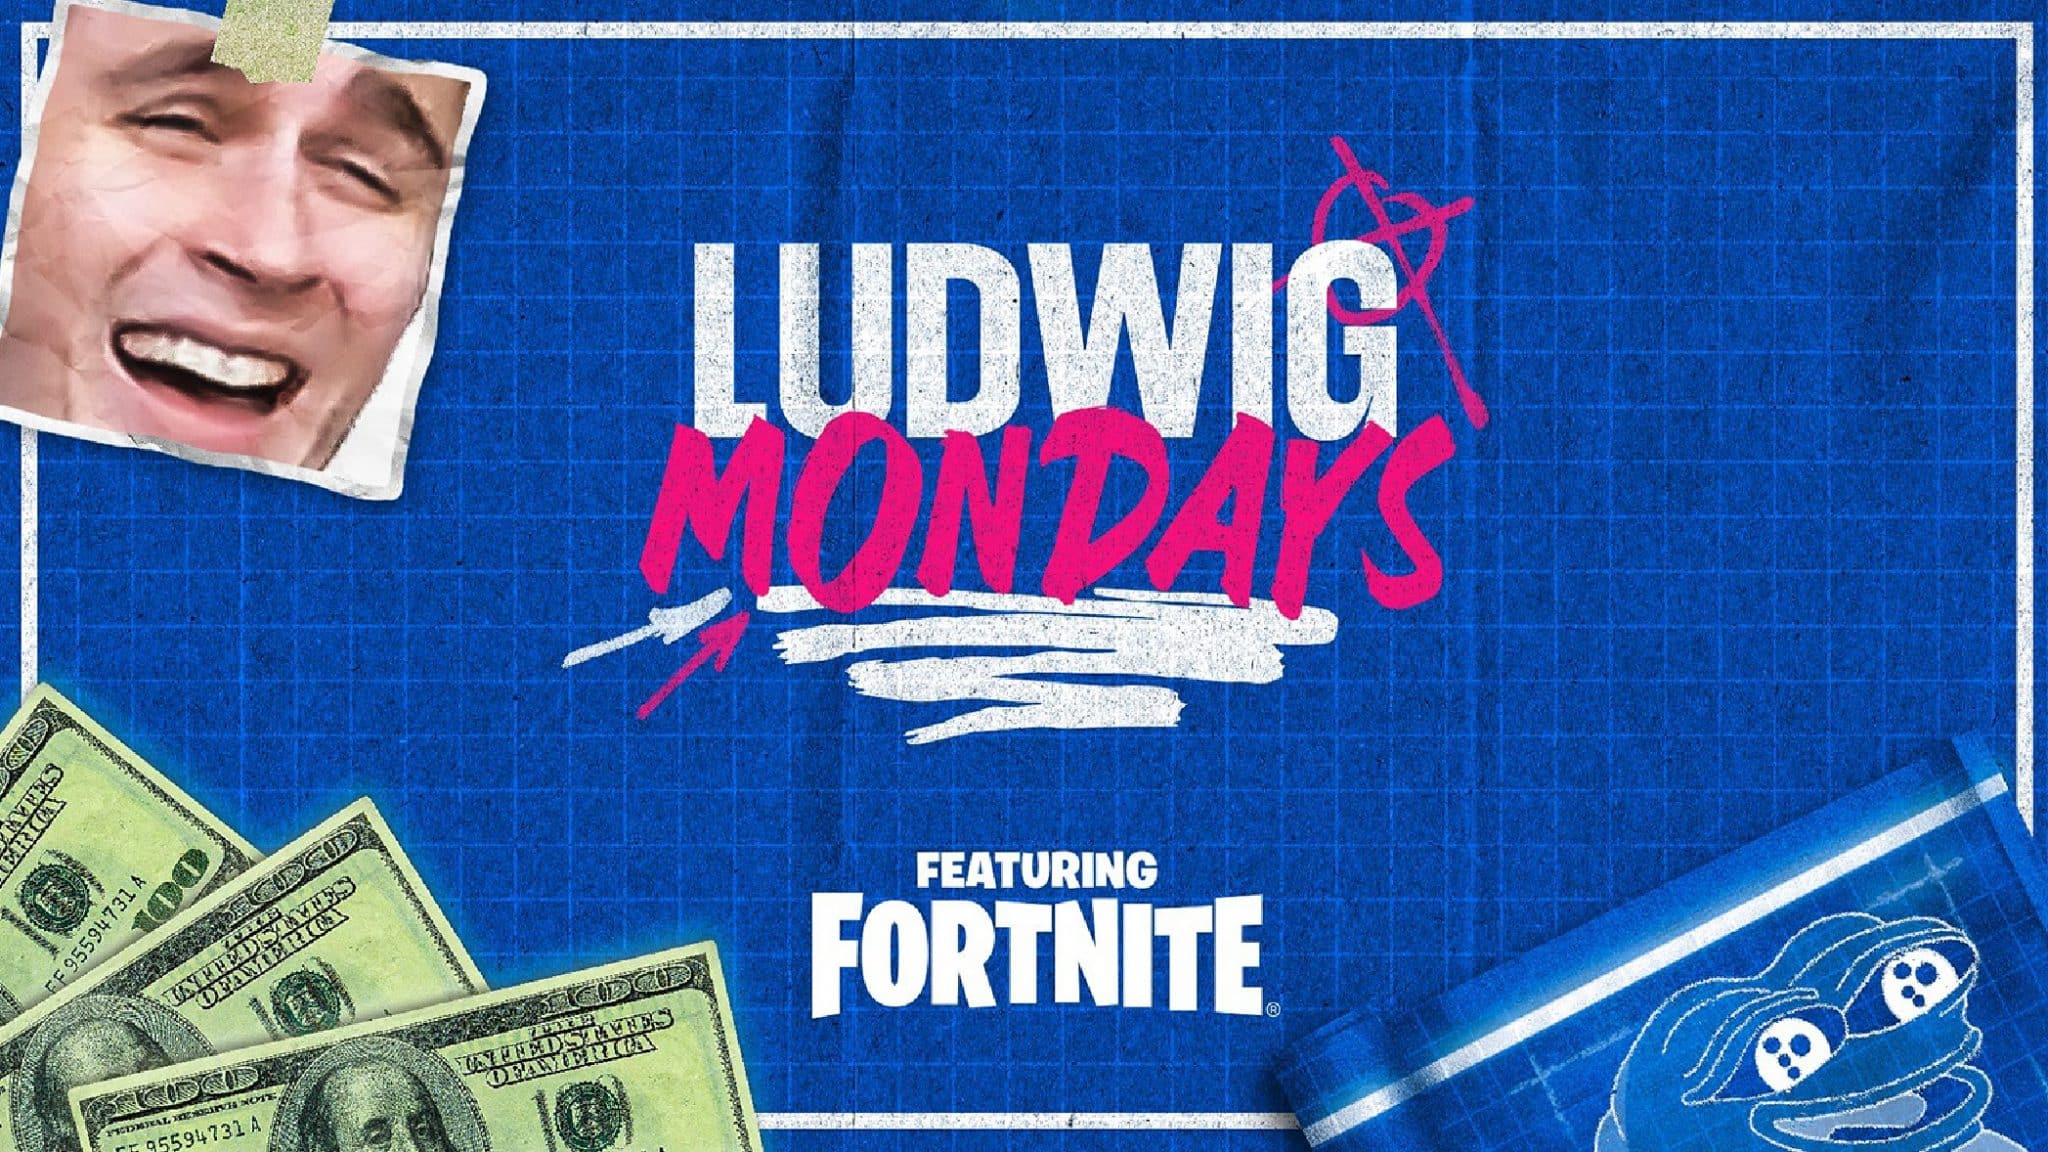 Ludwig Mondays Fortnite event graphic